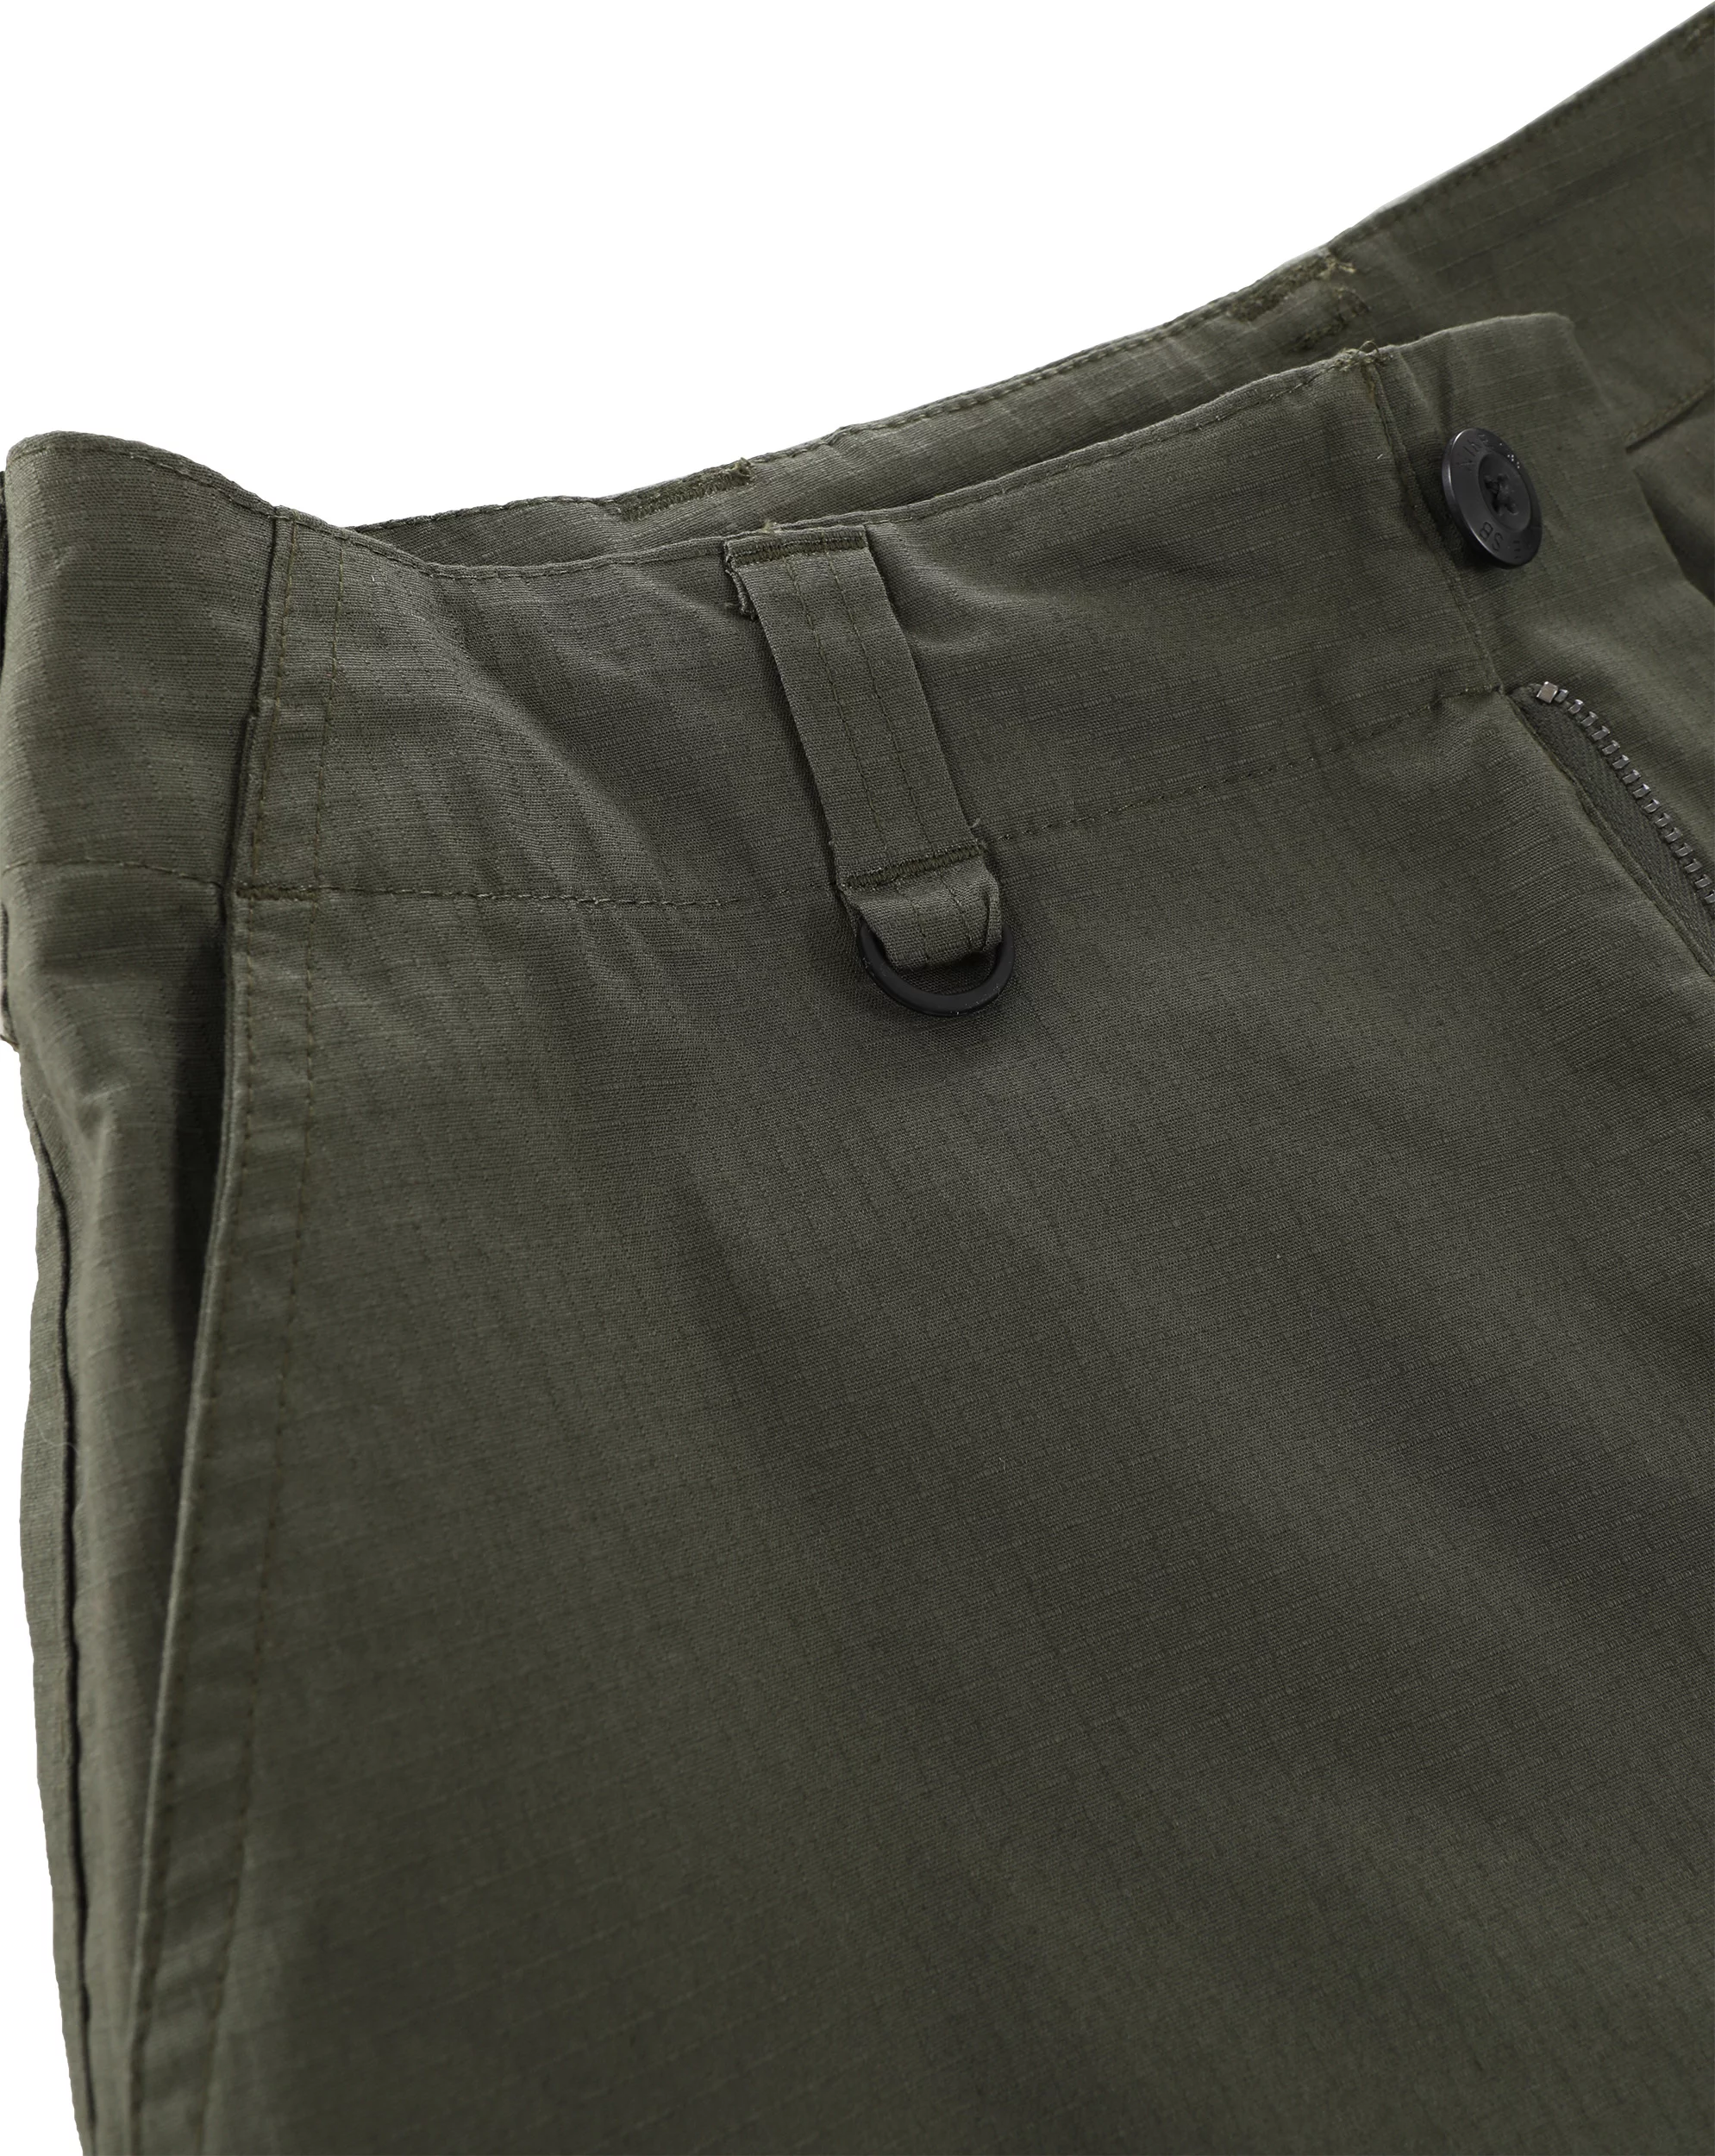 Nike SB SB Pants - cargo khaki - Free Shipping |